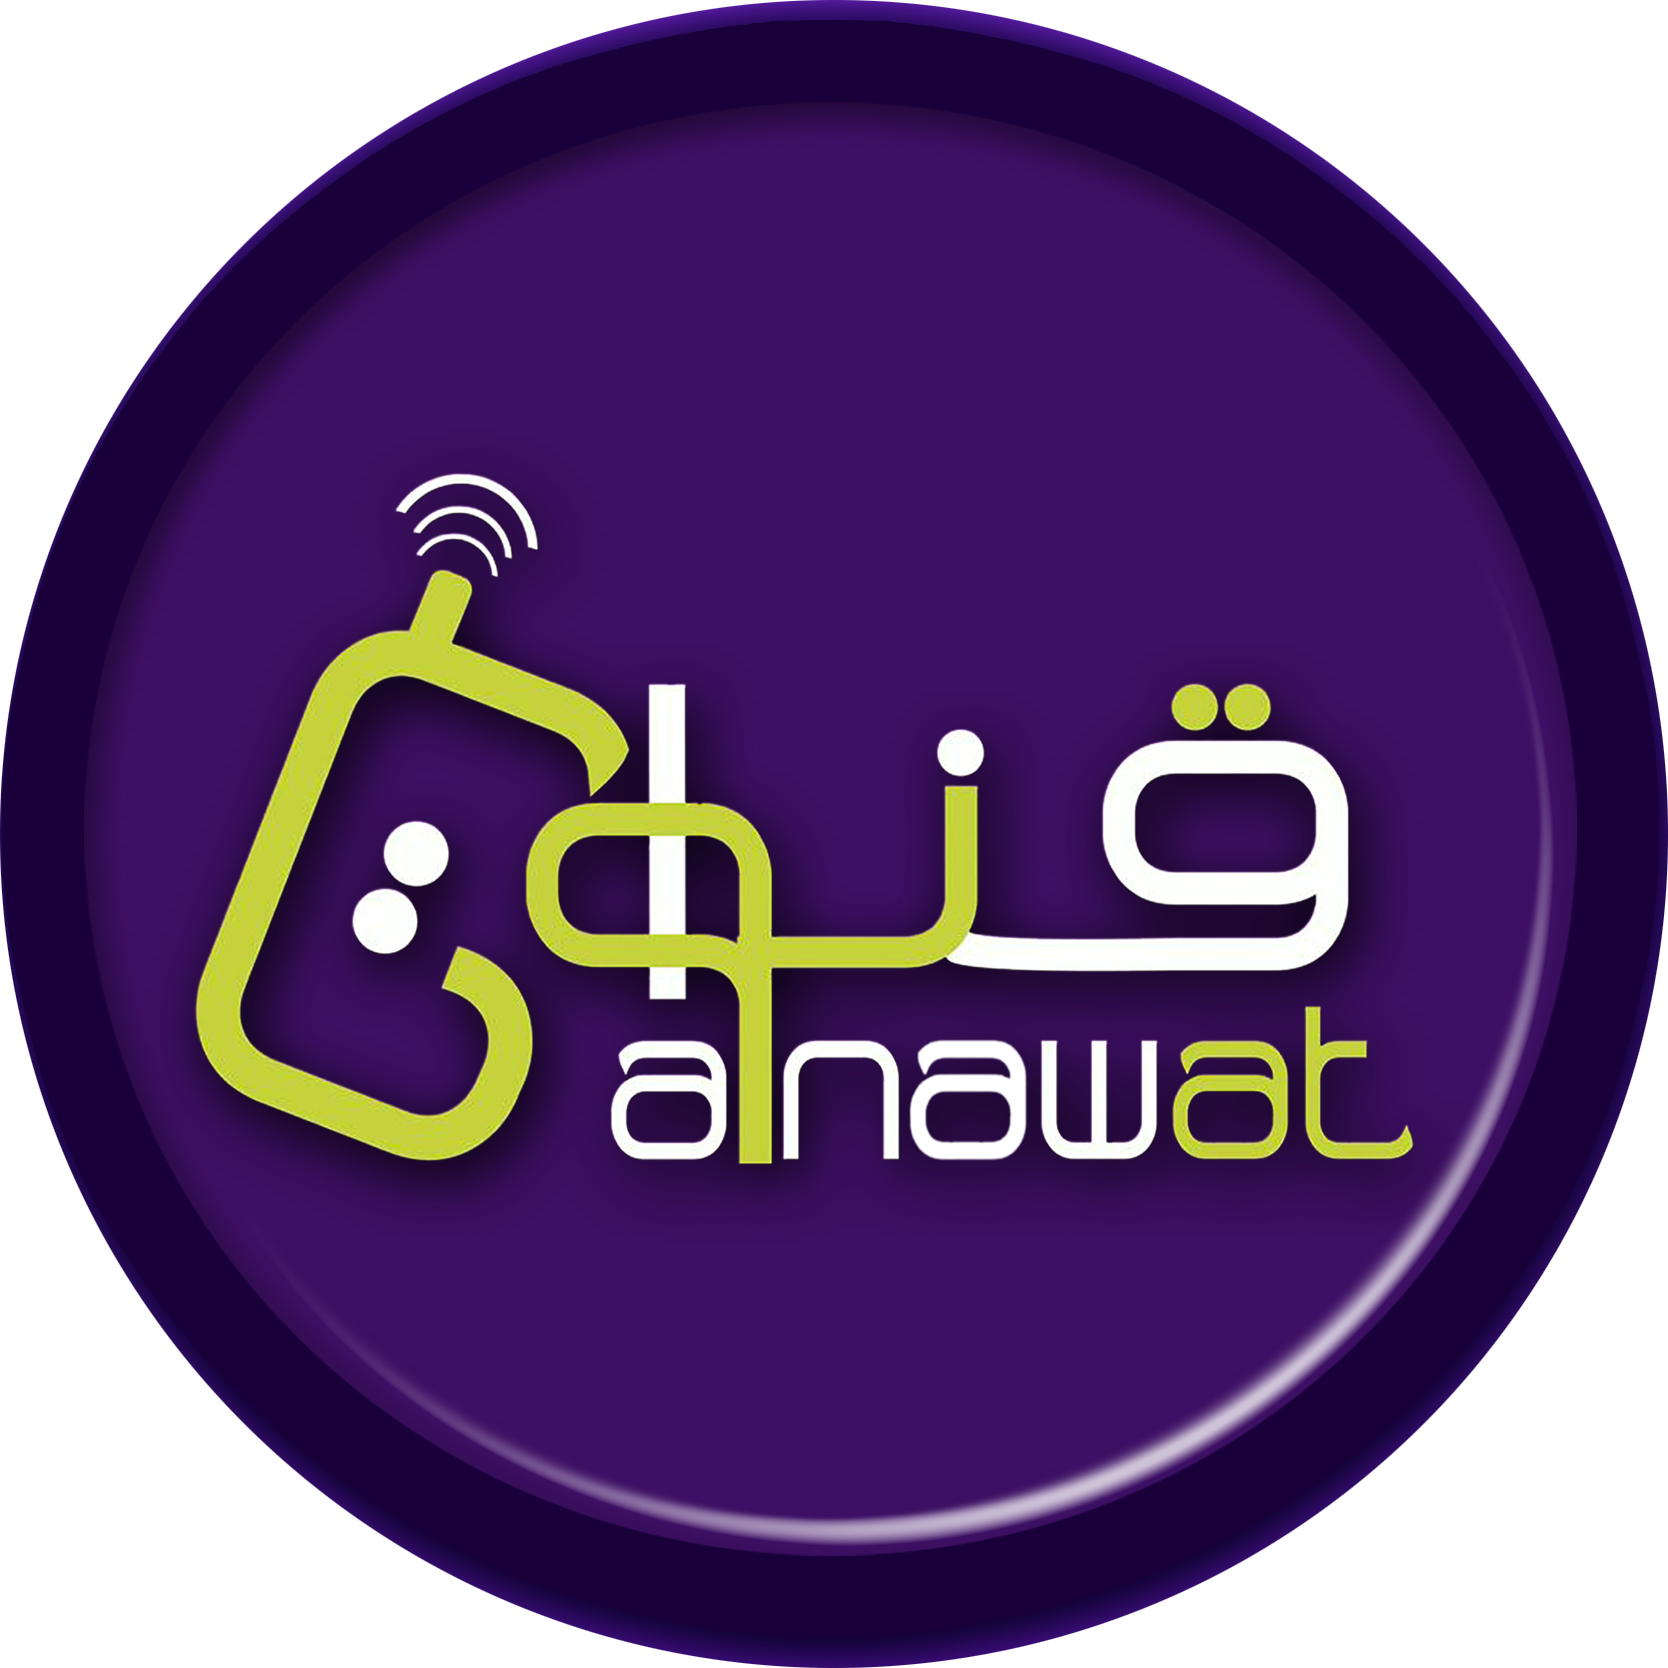 Qanawat